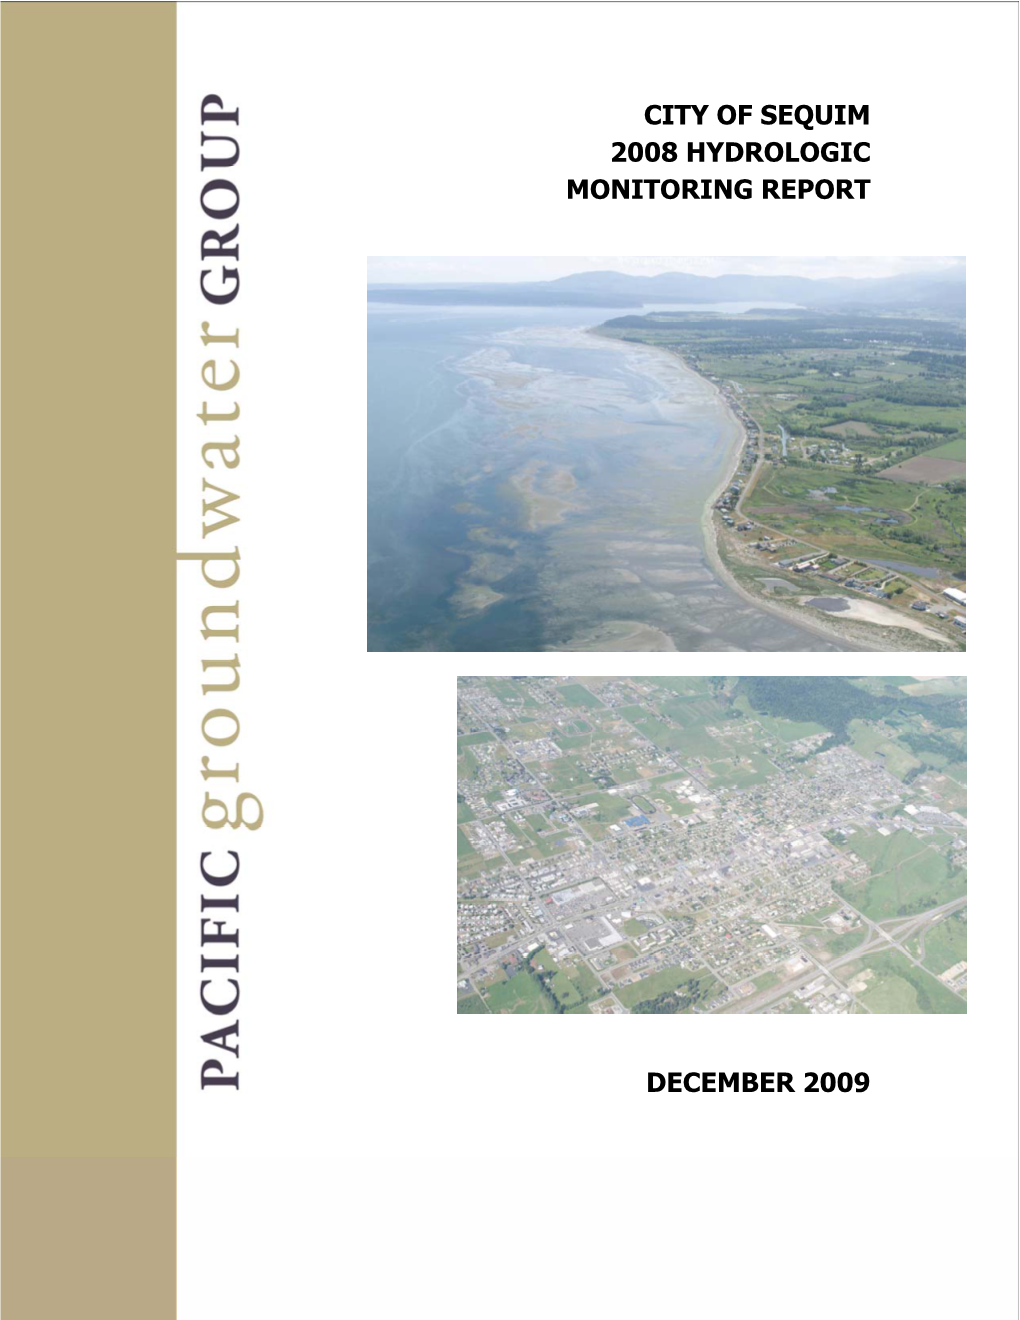 City of Sequim 2008 Hydrologic Monitoring Report December 2009